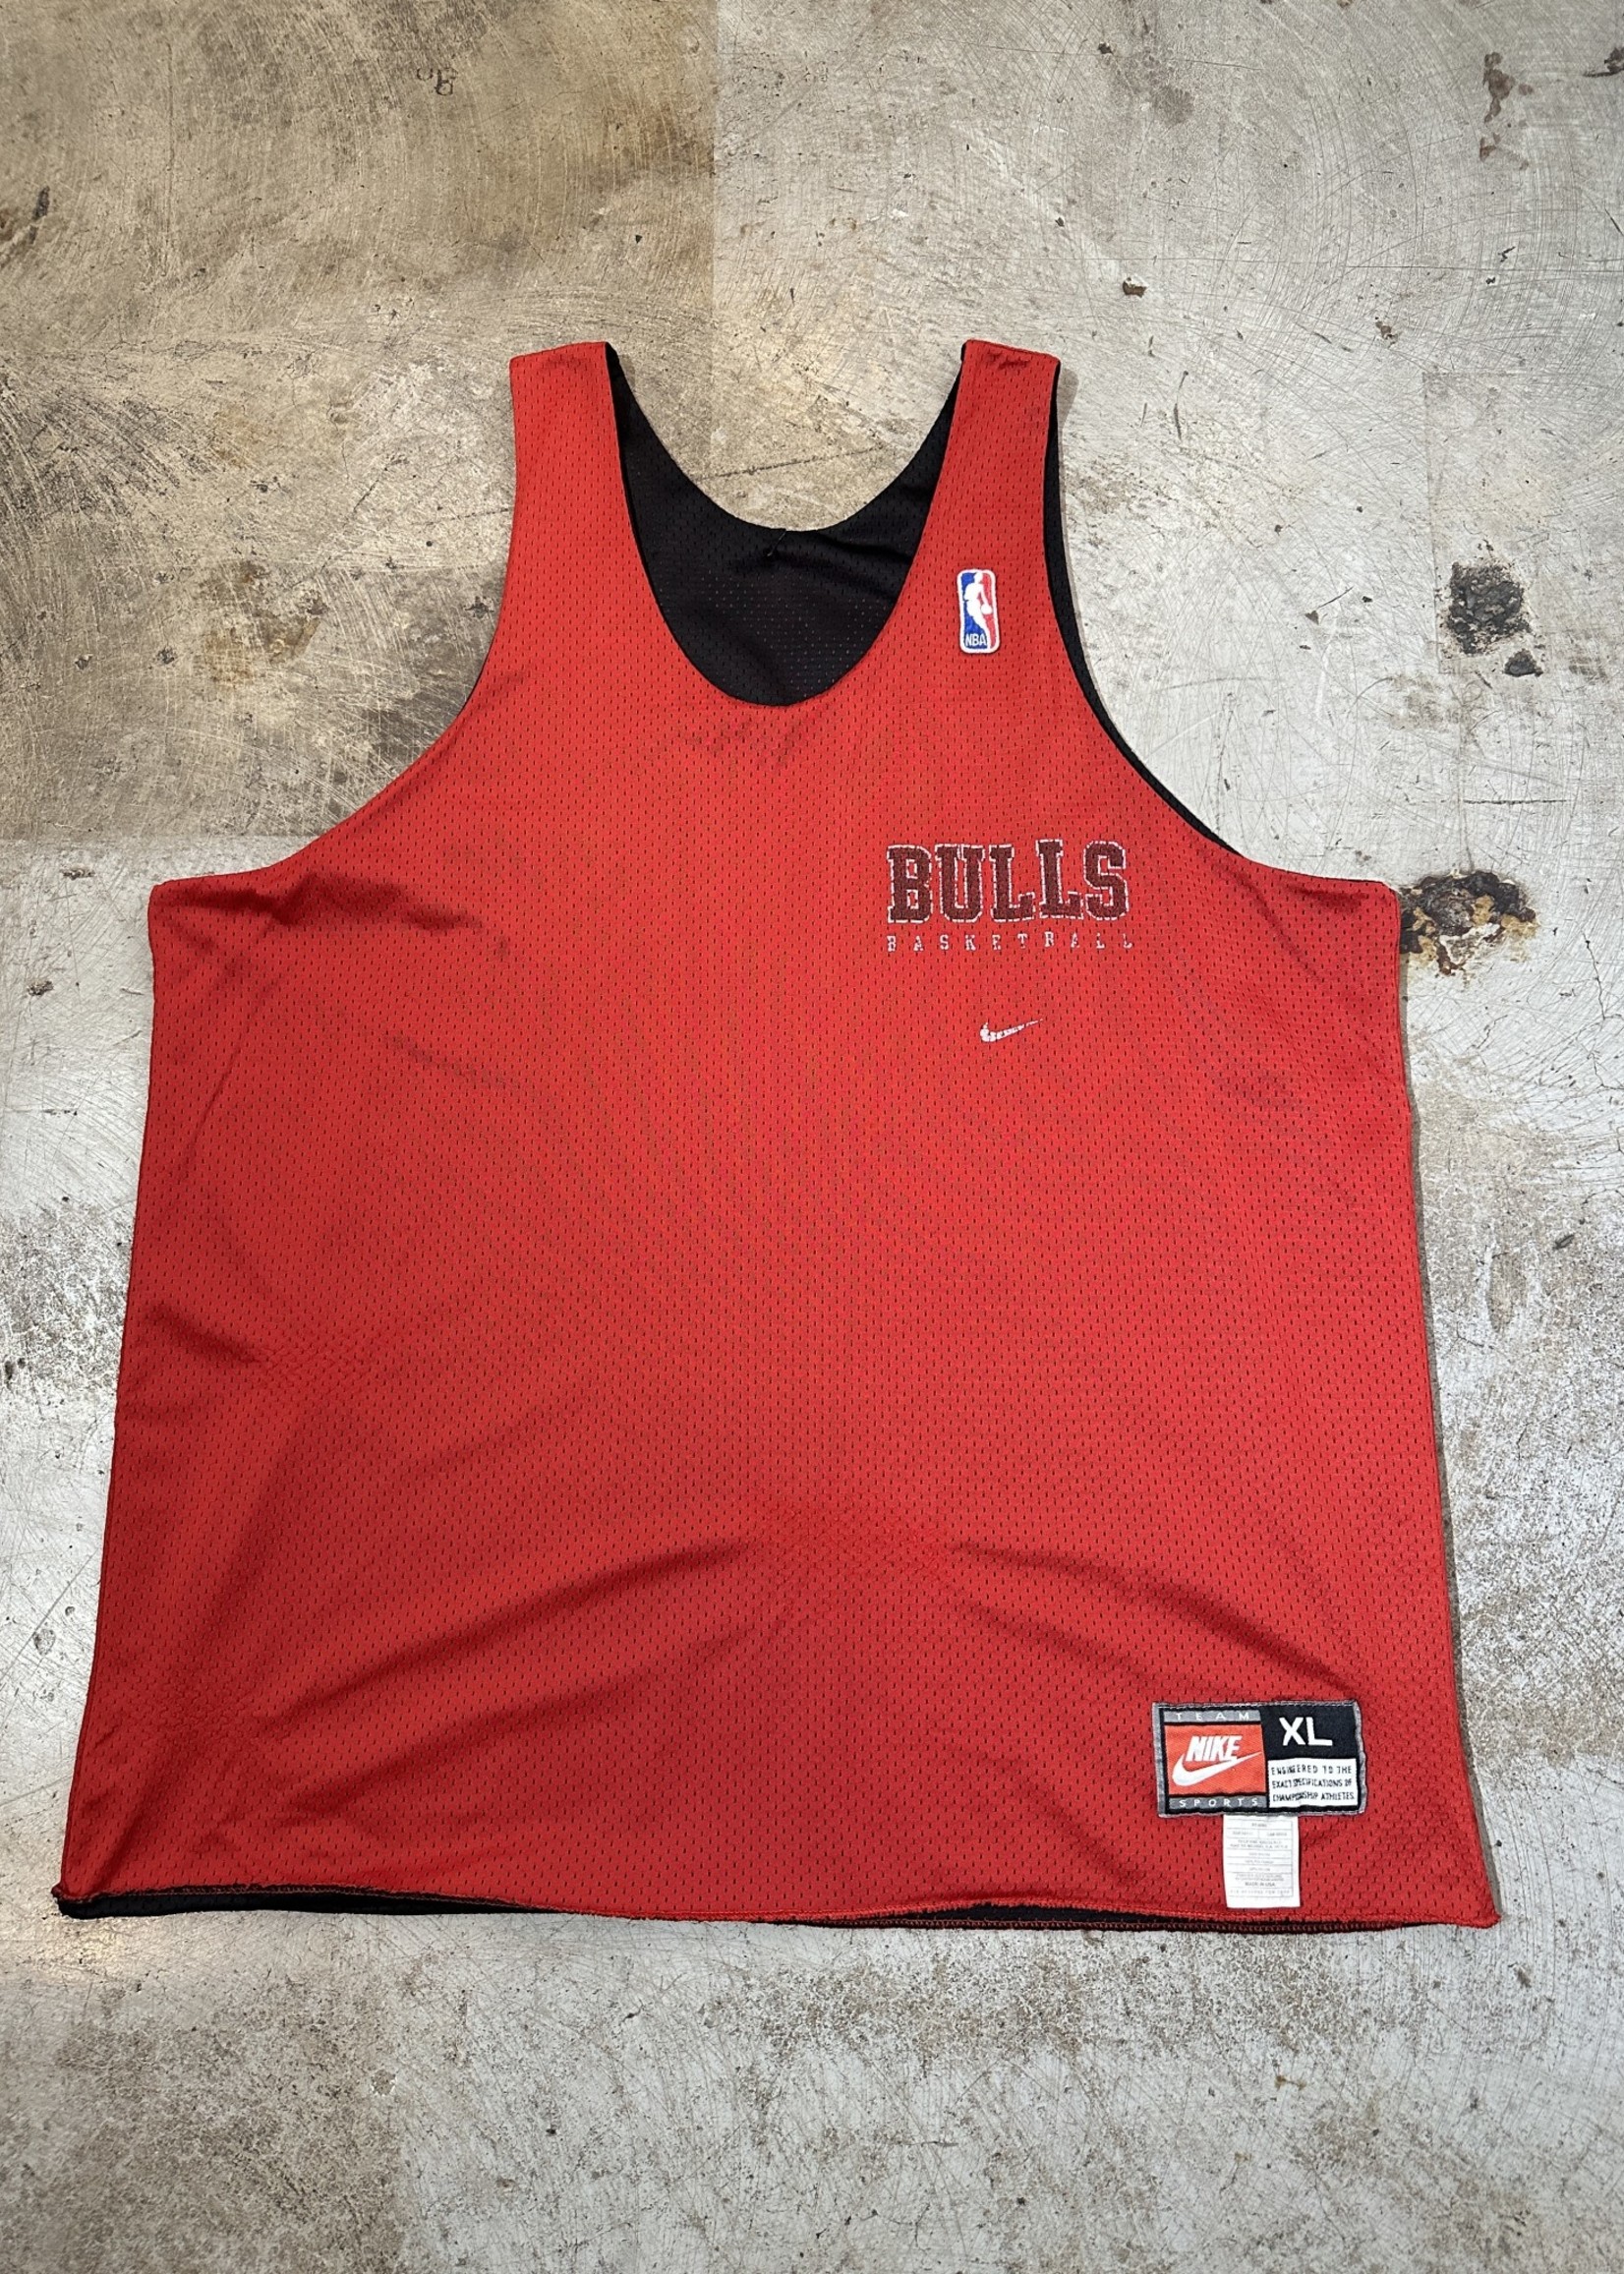 Nike Bulls Reversible Jersey XL